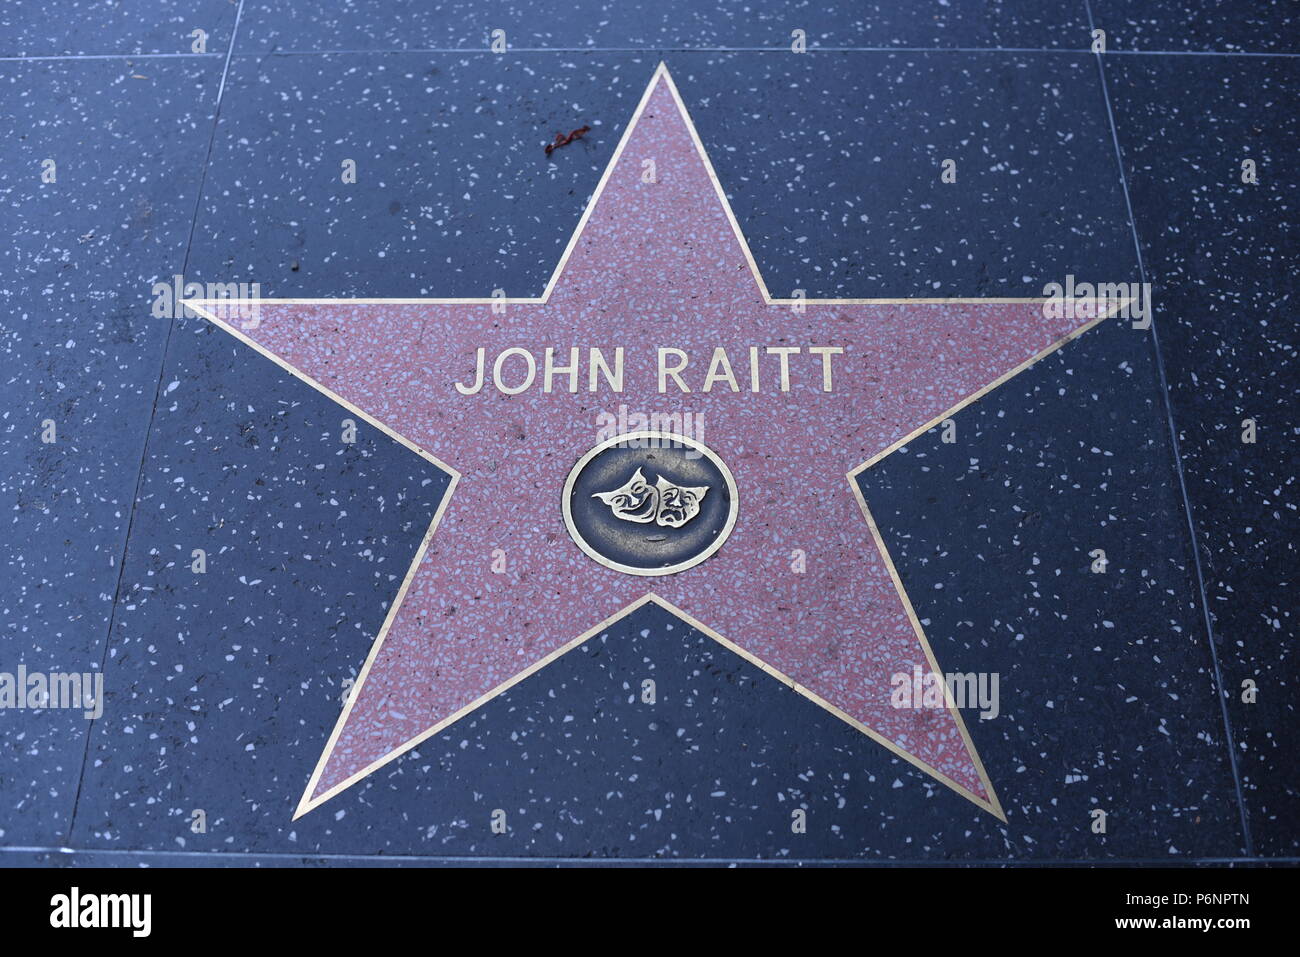 HOLLYWOOD, CA - 29 Giugno: John Raitt stella sulla Hollywood Walk of Fame in Hollywood, la California il 29 giugno 2018. Foto Stock